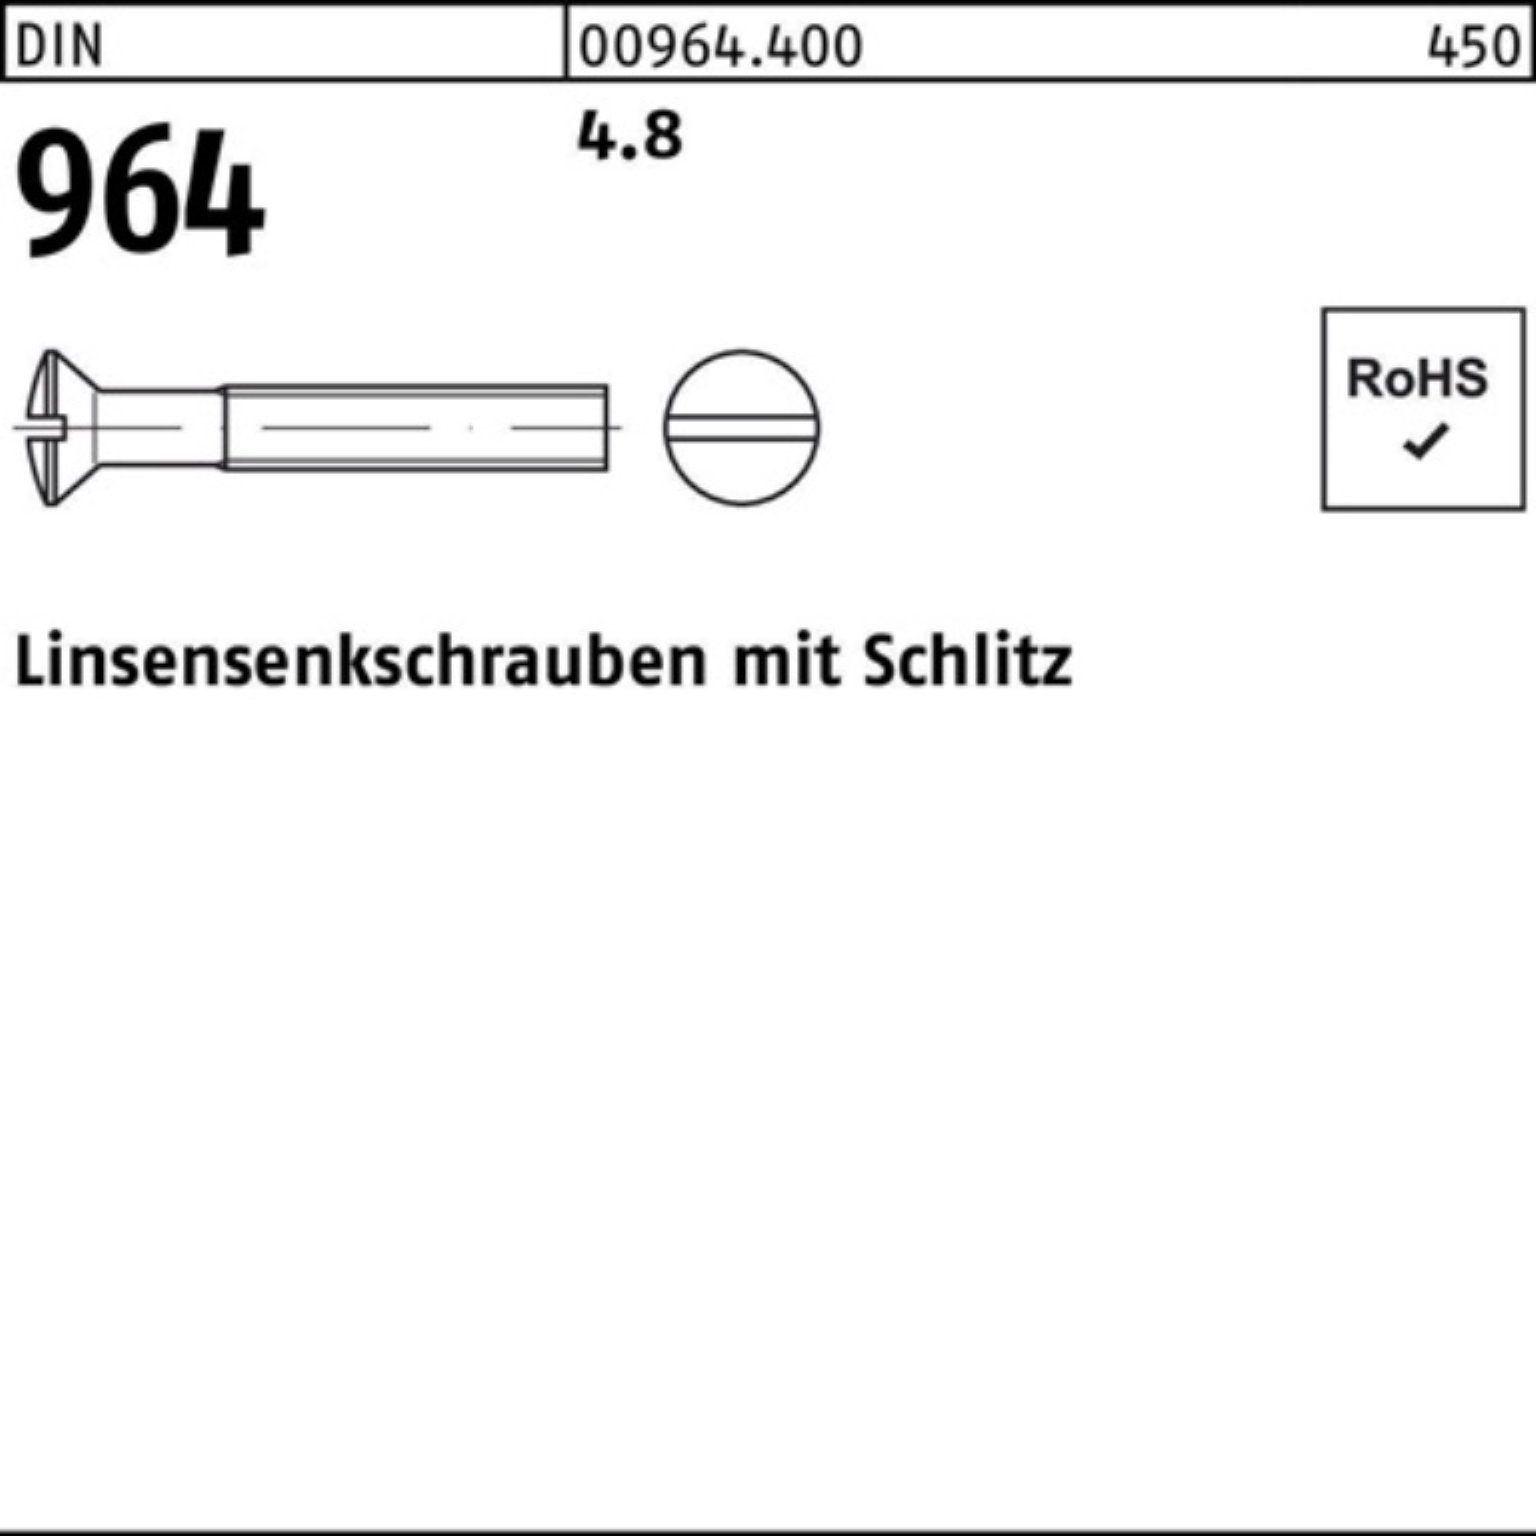 DIN 2000 Schlitz Linsenschraube Linsensenkschraube Reyher 4.8 M4x Pack Stück 964 12 2000er